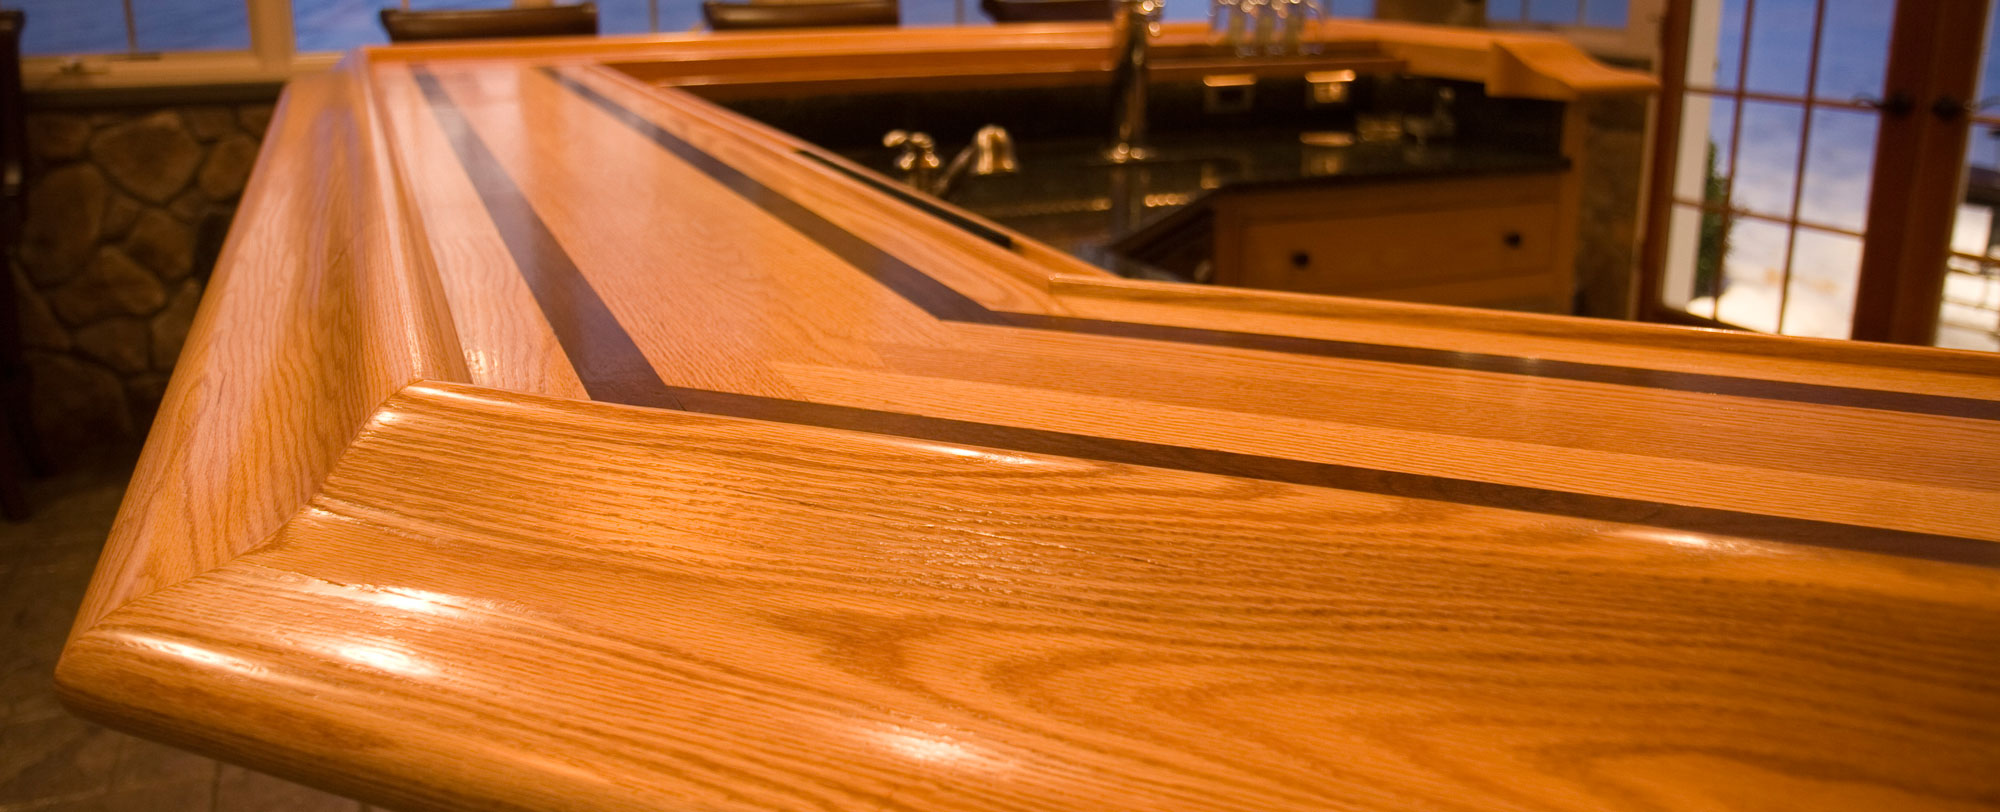 hardwood-for-bar-countertop